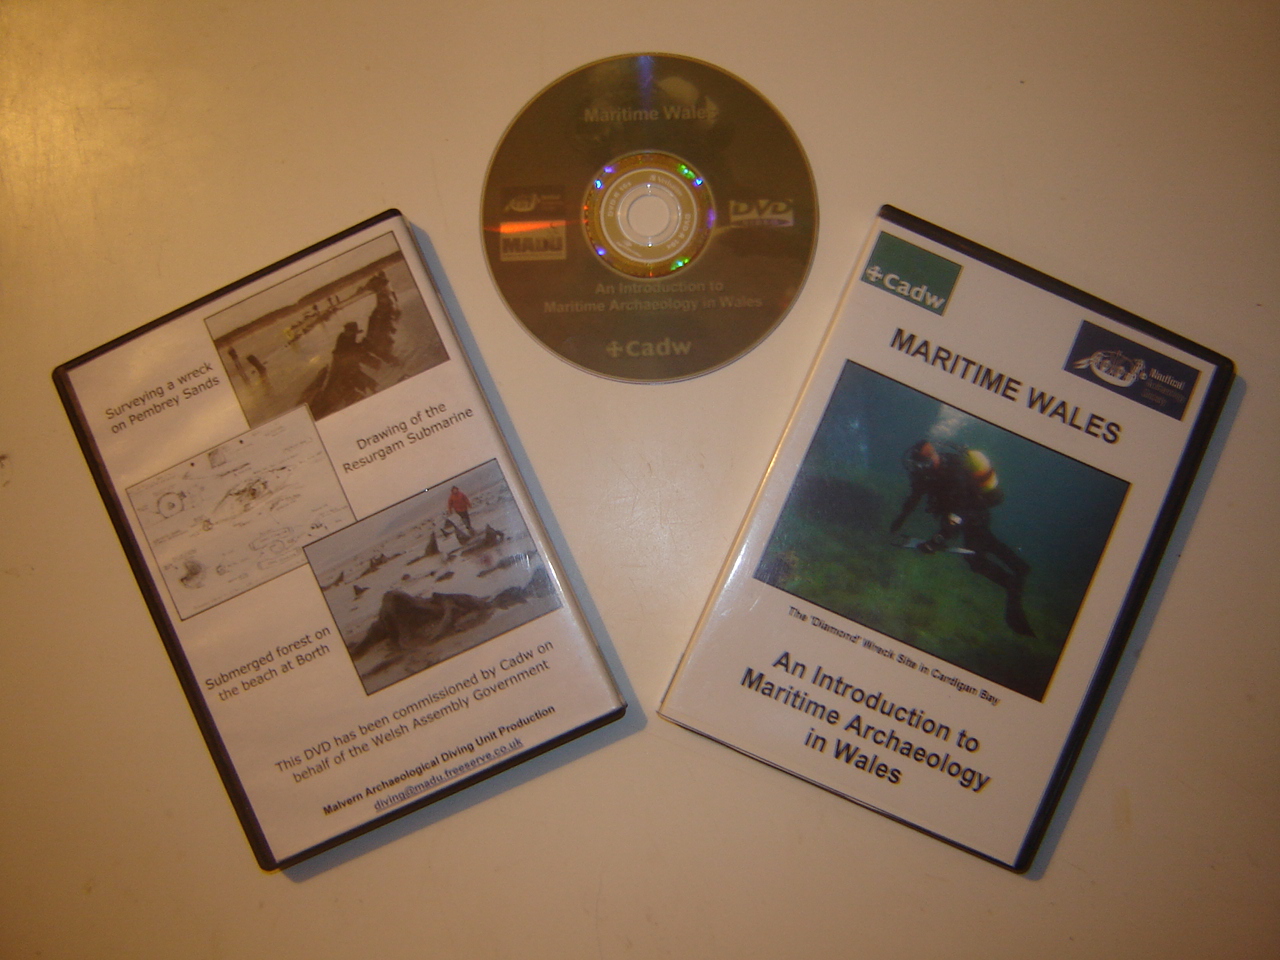 "Maritime Wales" DVD